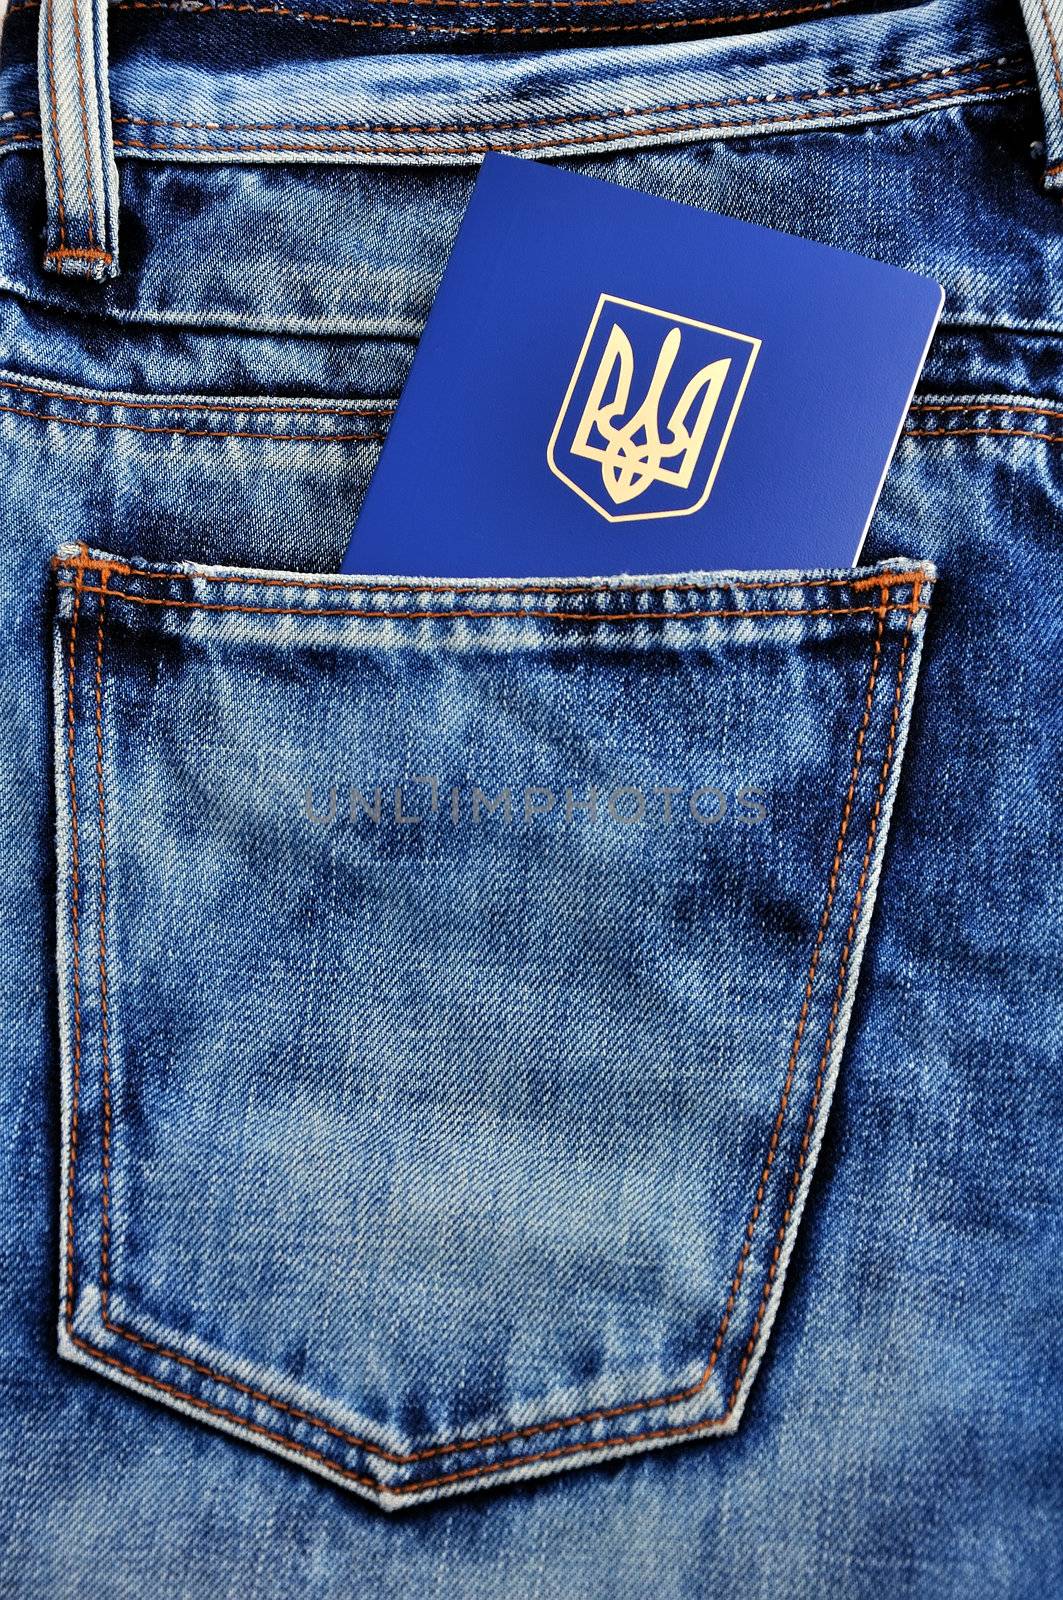 Ukrainian foreign passport by vetkit